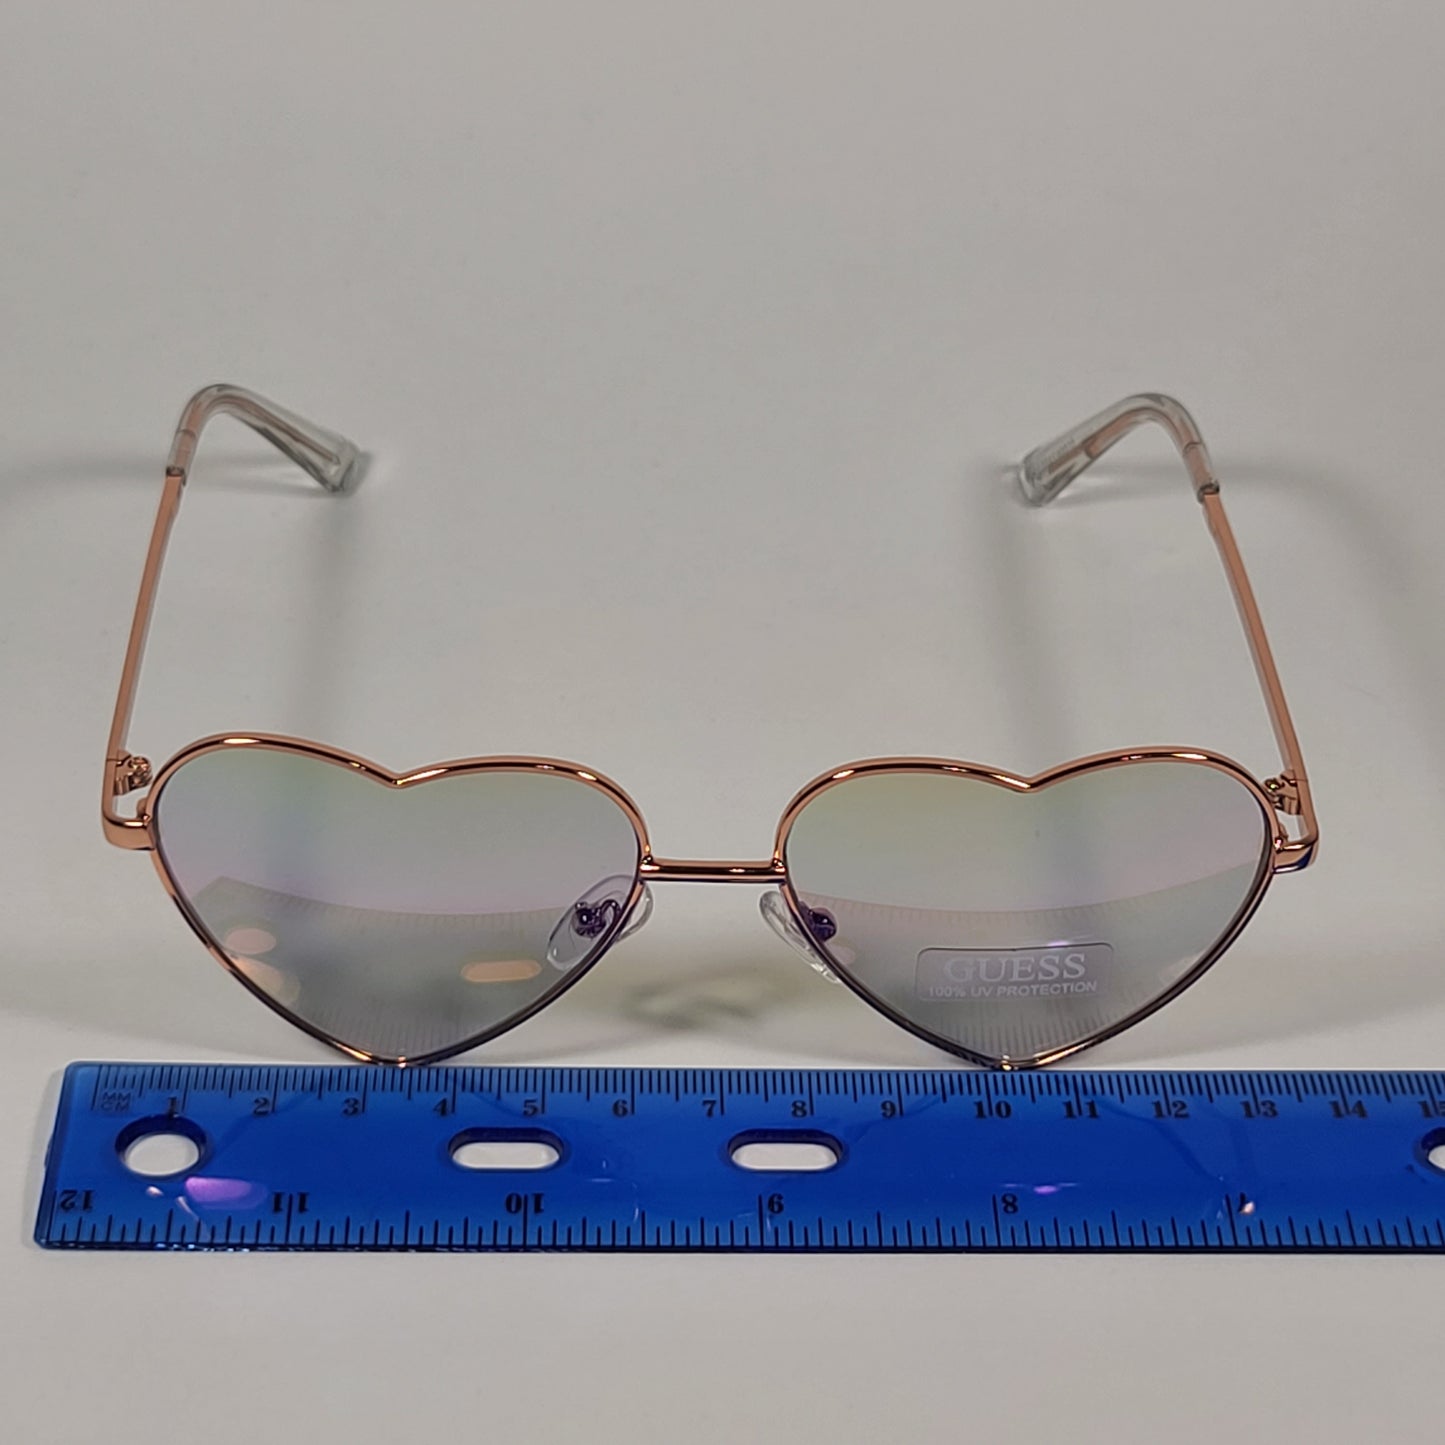 Guess Small Heart Sunglasses Gold Tone Metal Frame Rainbow Flash Lens GF4008 32W - Sunglasses